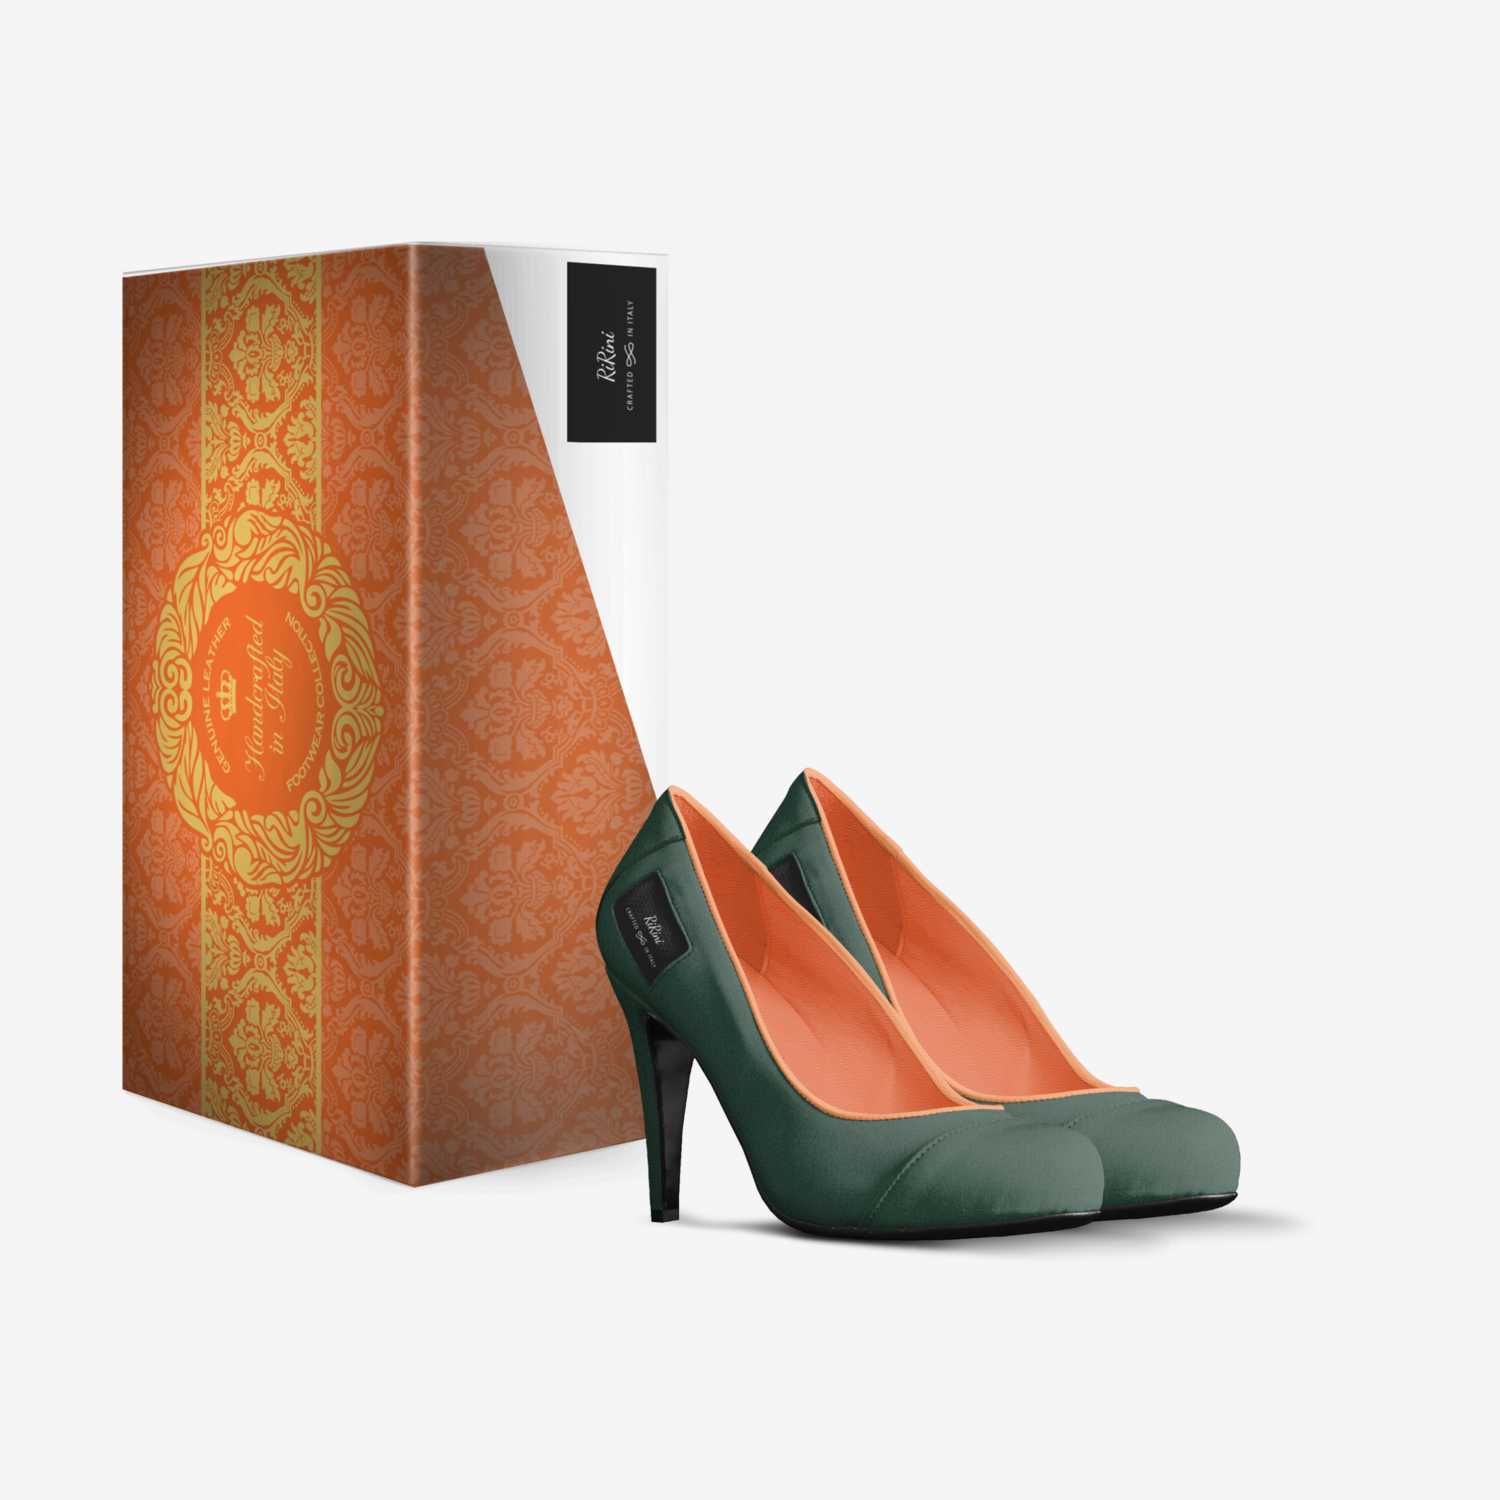 RiRini  custom made in Italy shoes by Ririni | Box view